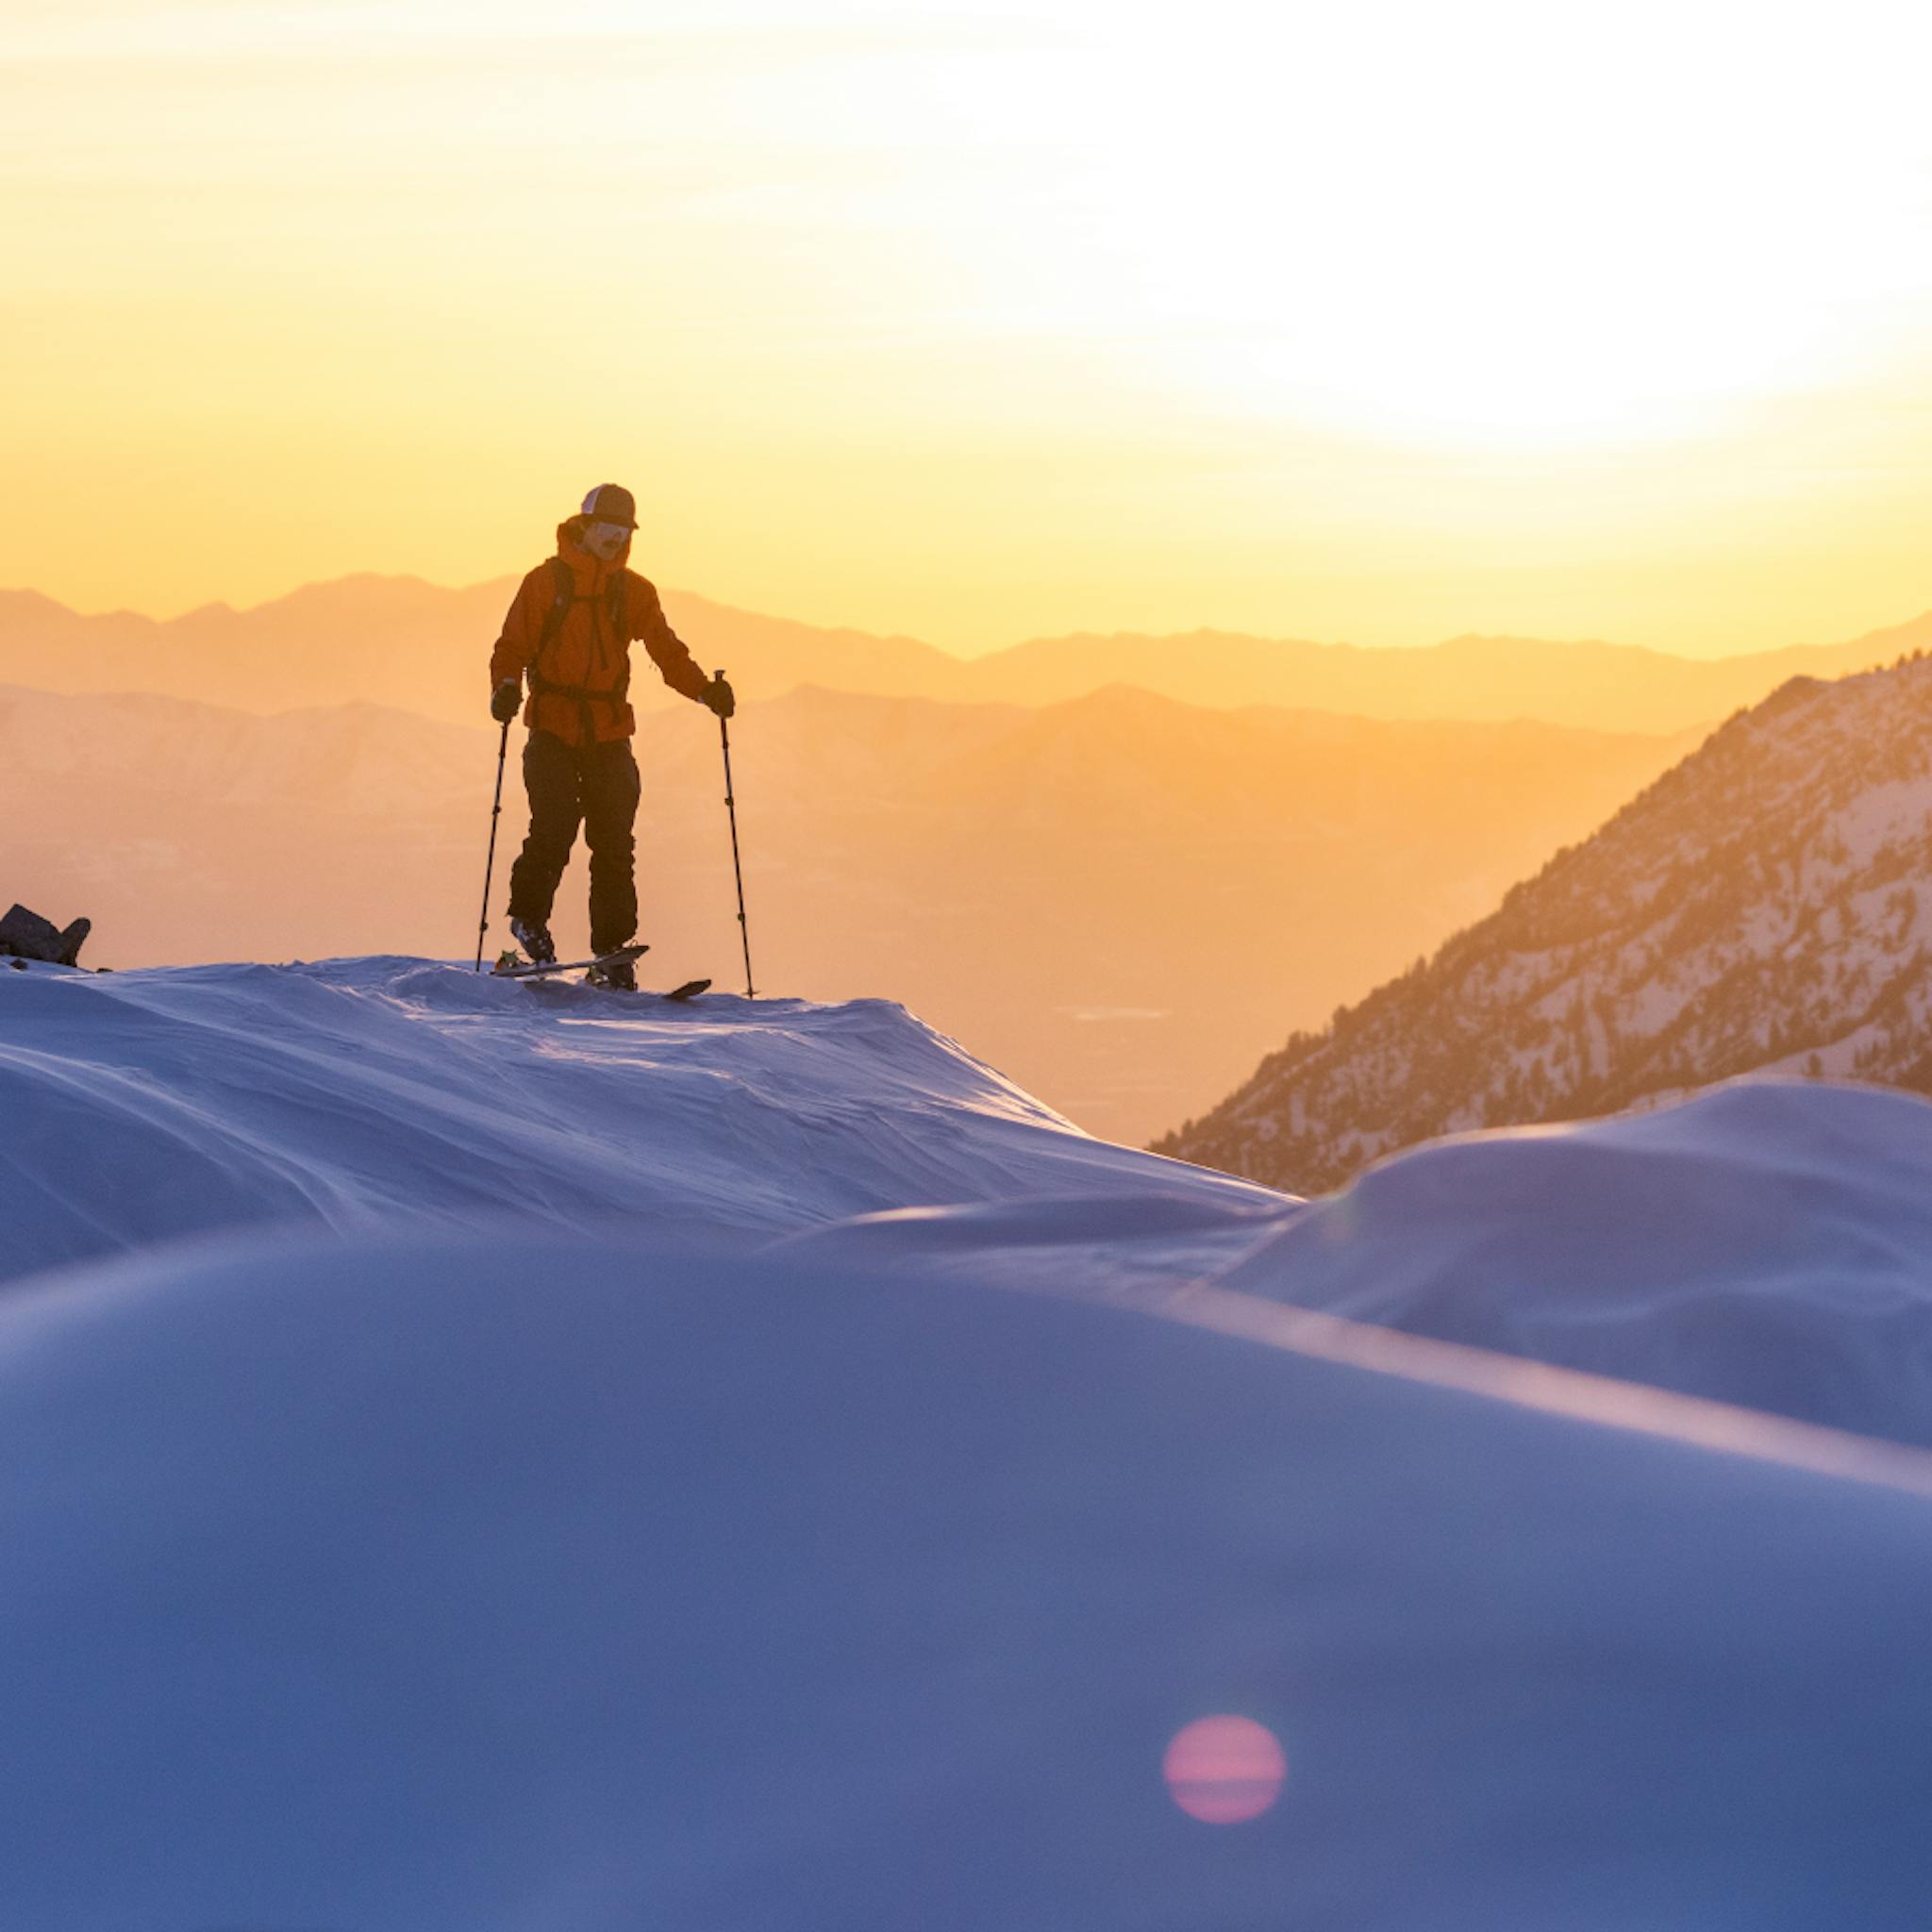 A backcountry skier out for a dawn patrol ski tour.